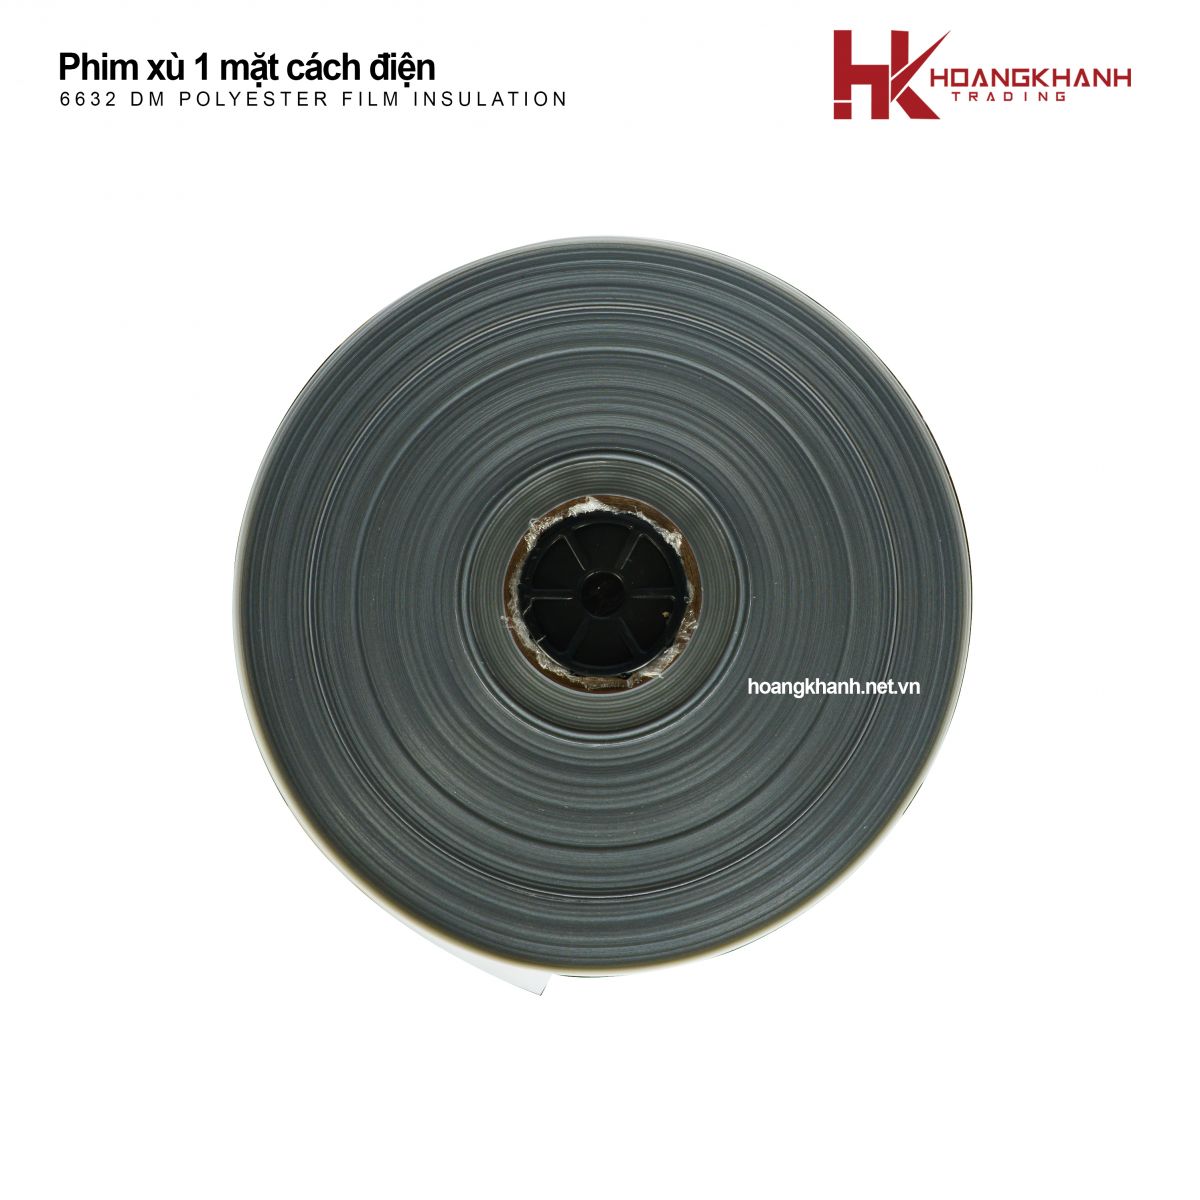 6632 DM Polyester Film Insulation